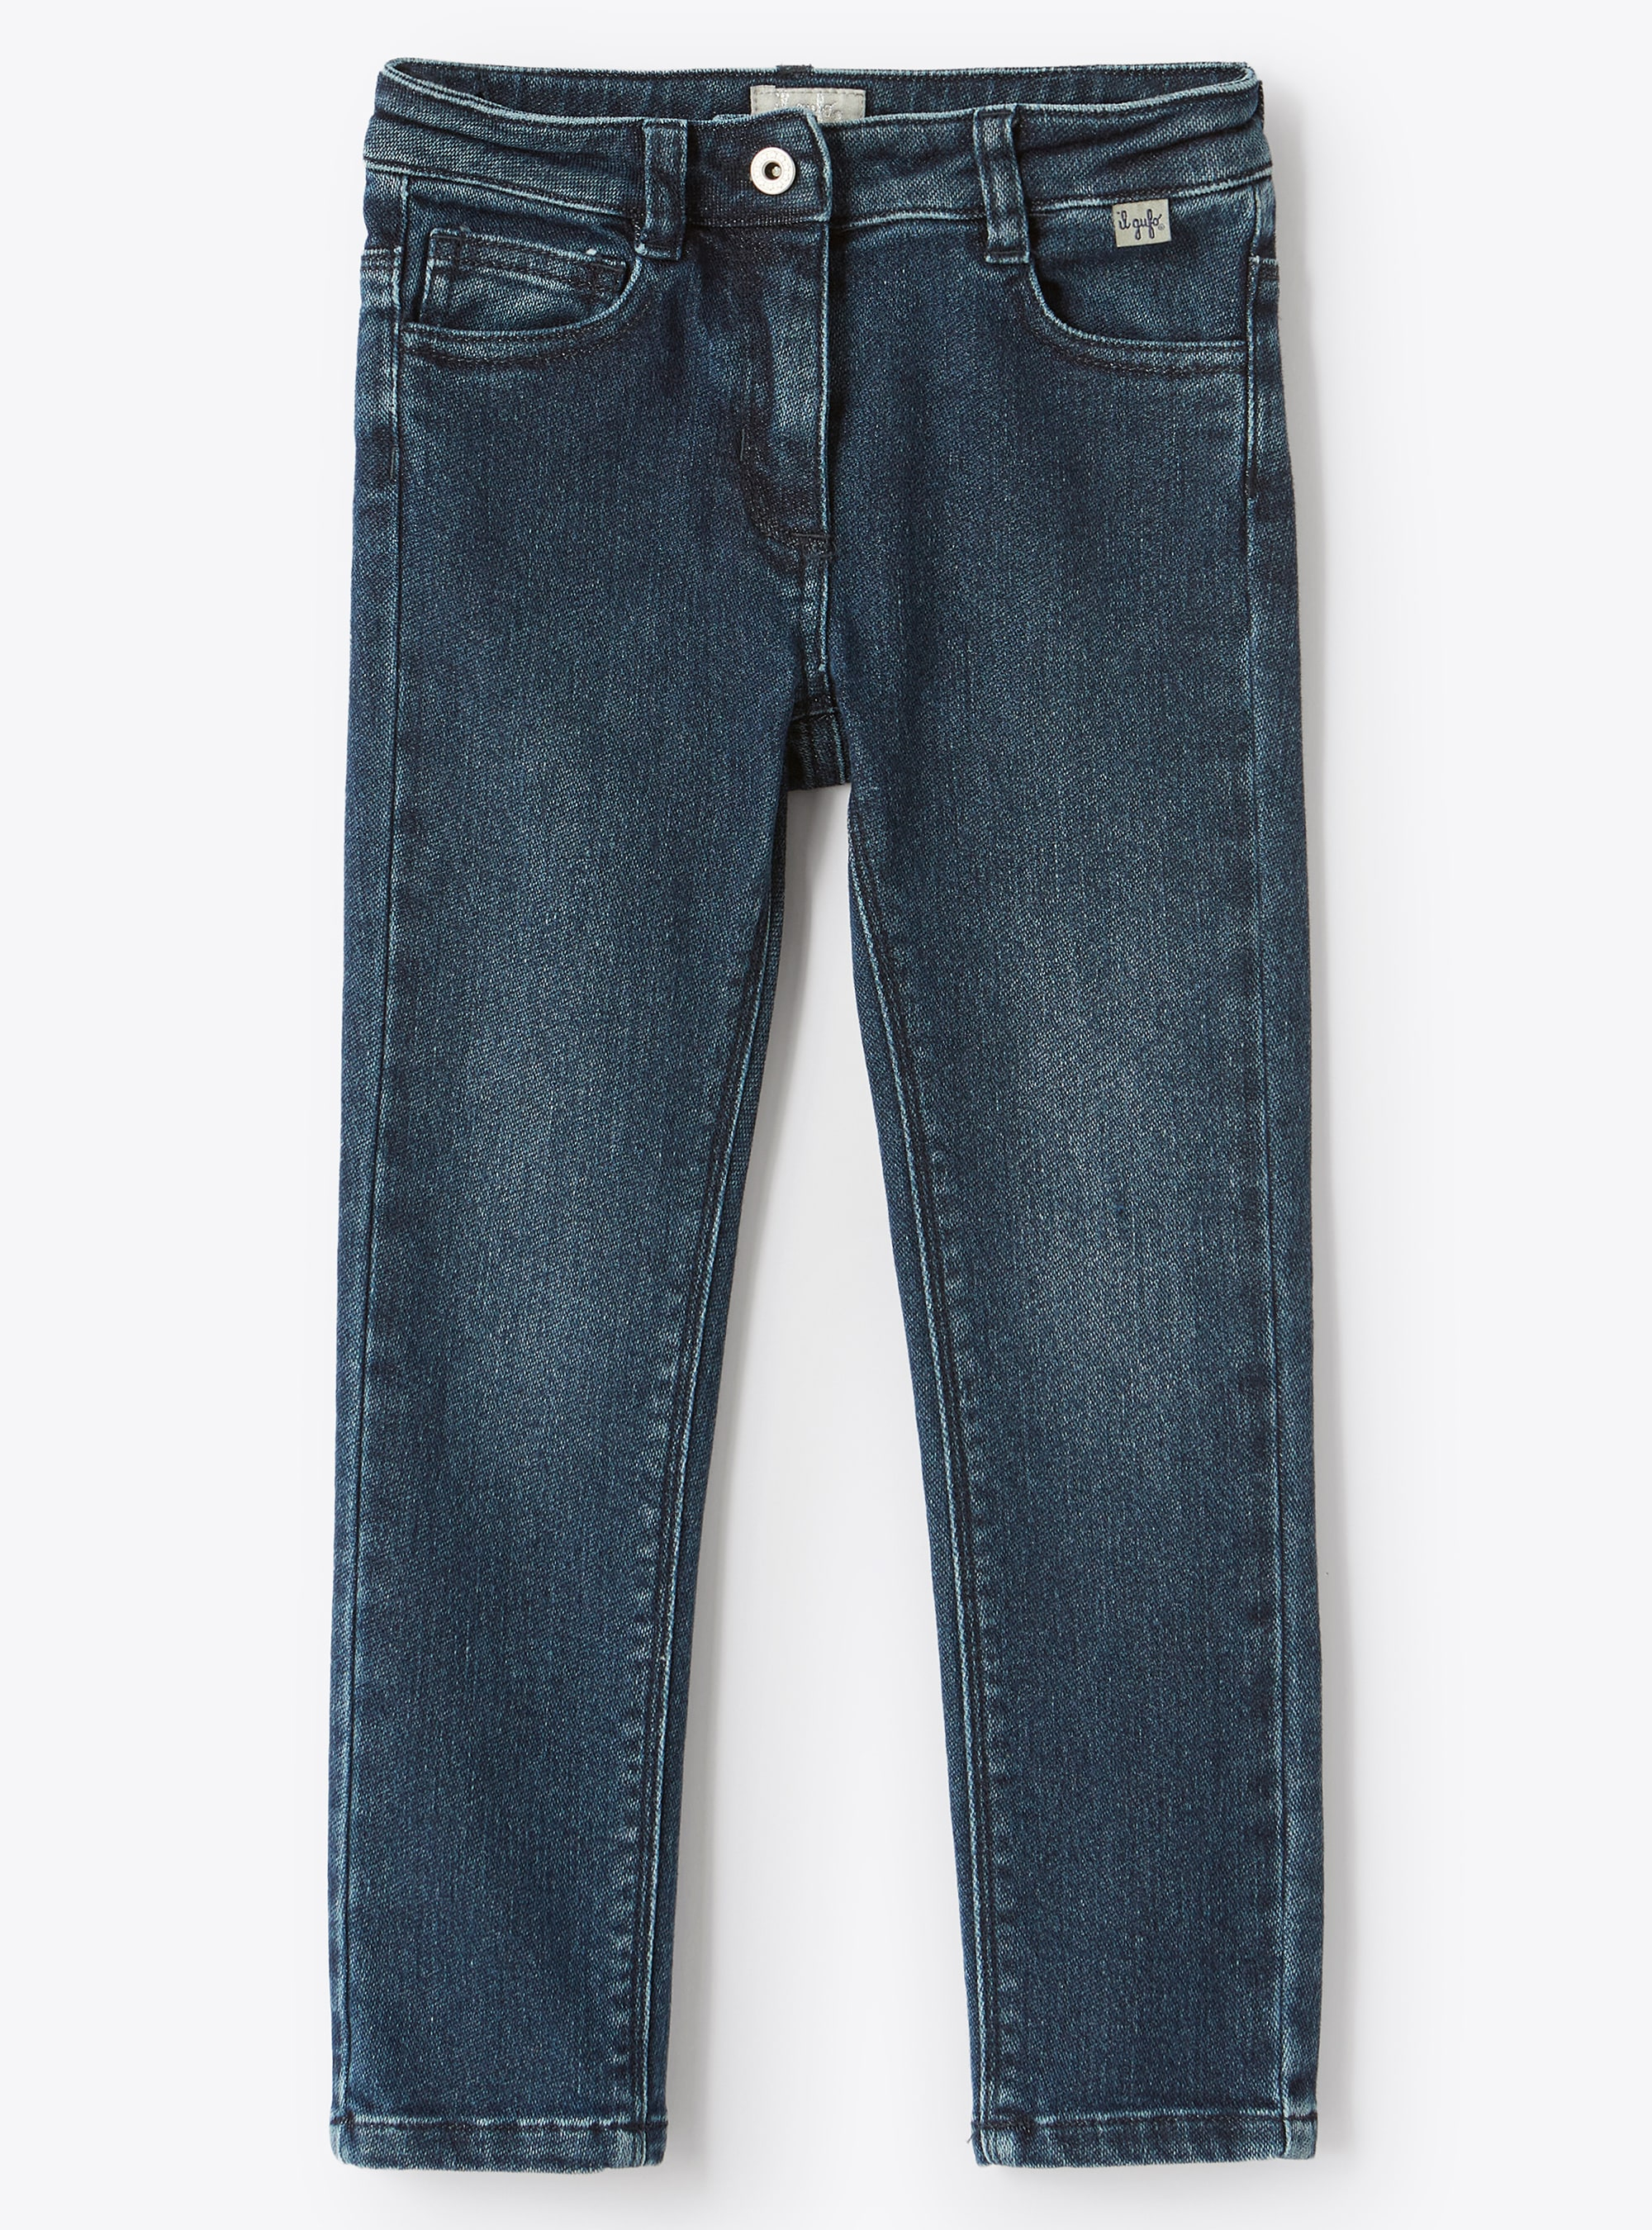 Skinny dark wash jeans - Trousers - Il Gufo